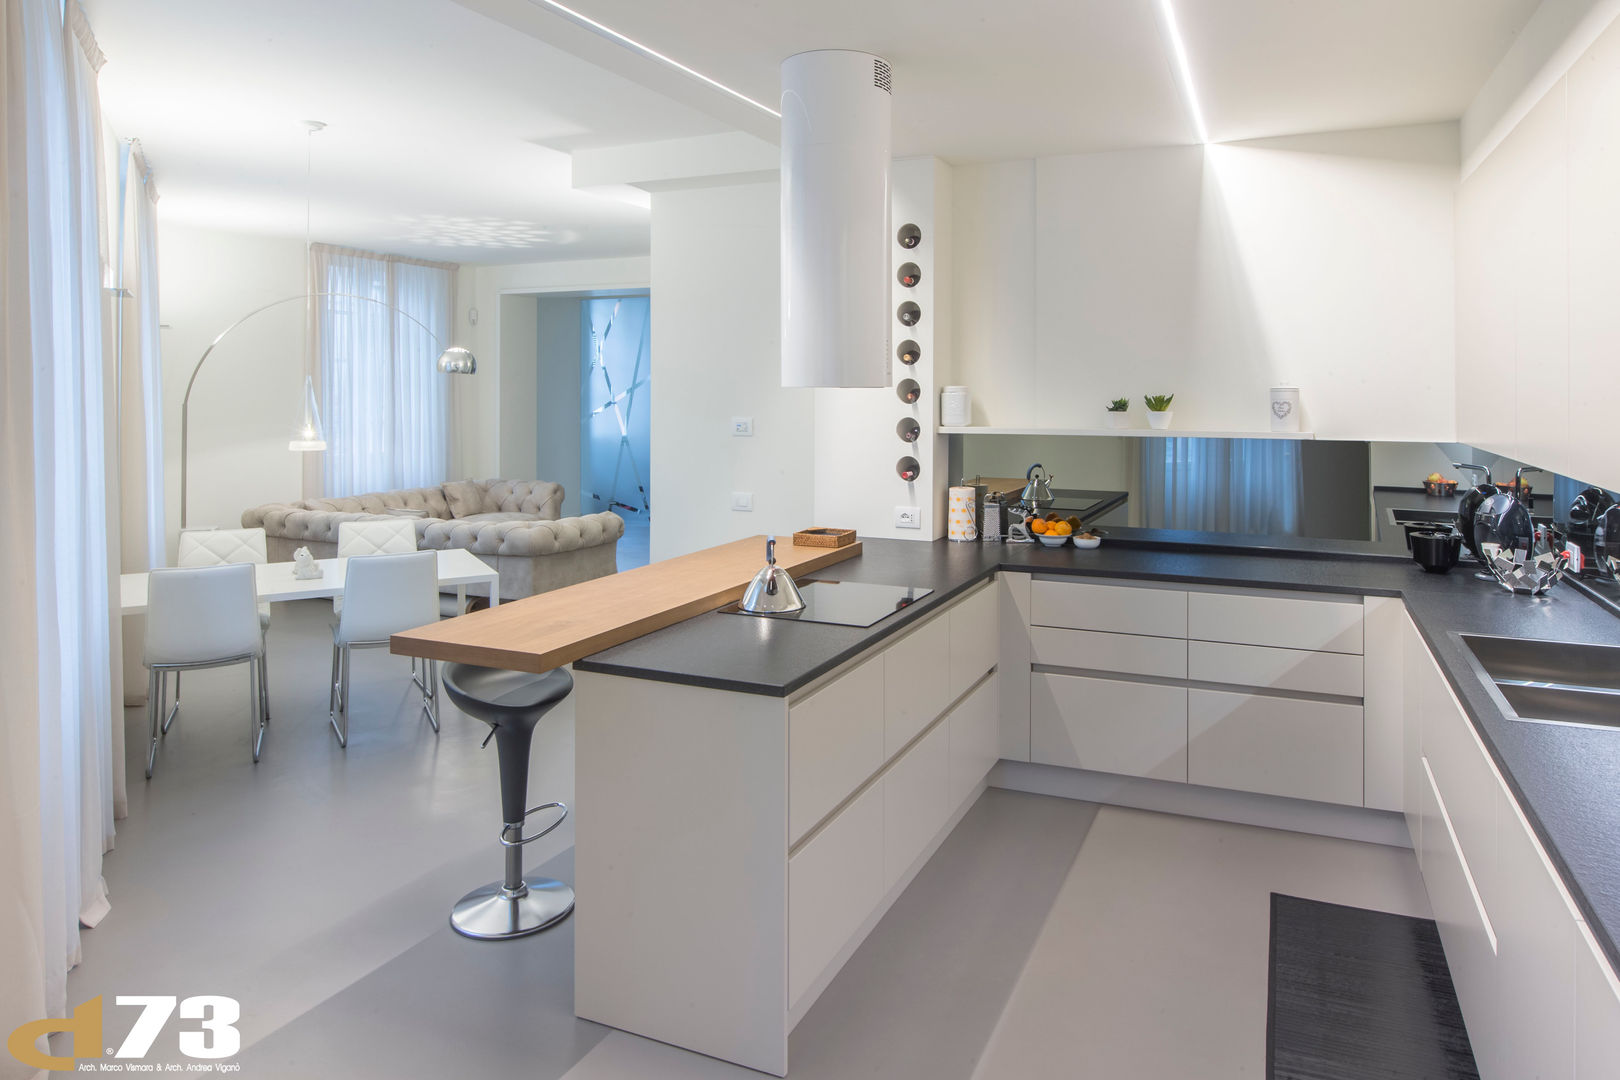 Appartamento privato pieno di luce, Studio D73 Studio D73 Cocinas de estilo moderno